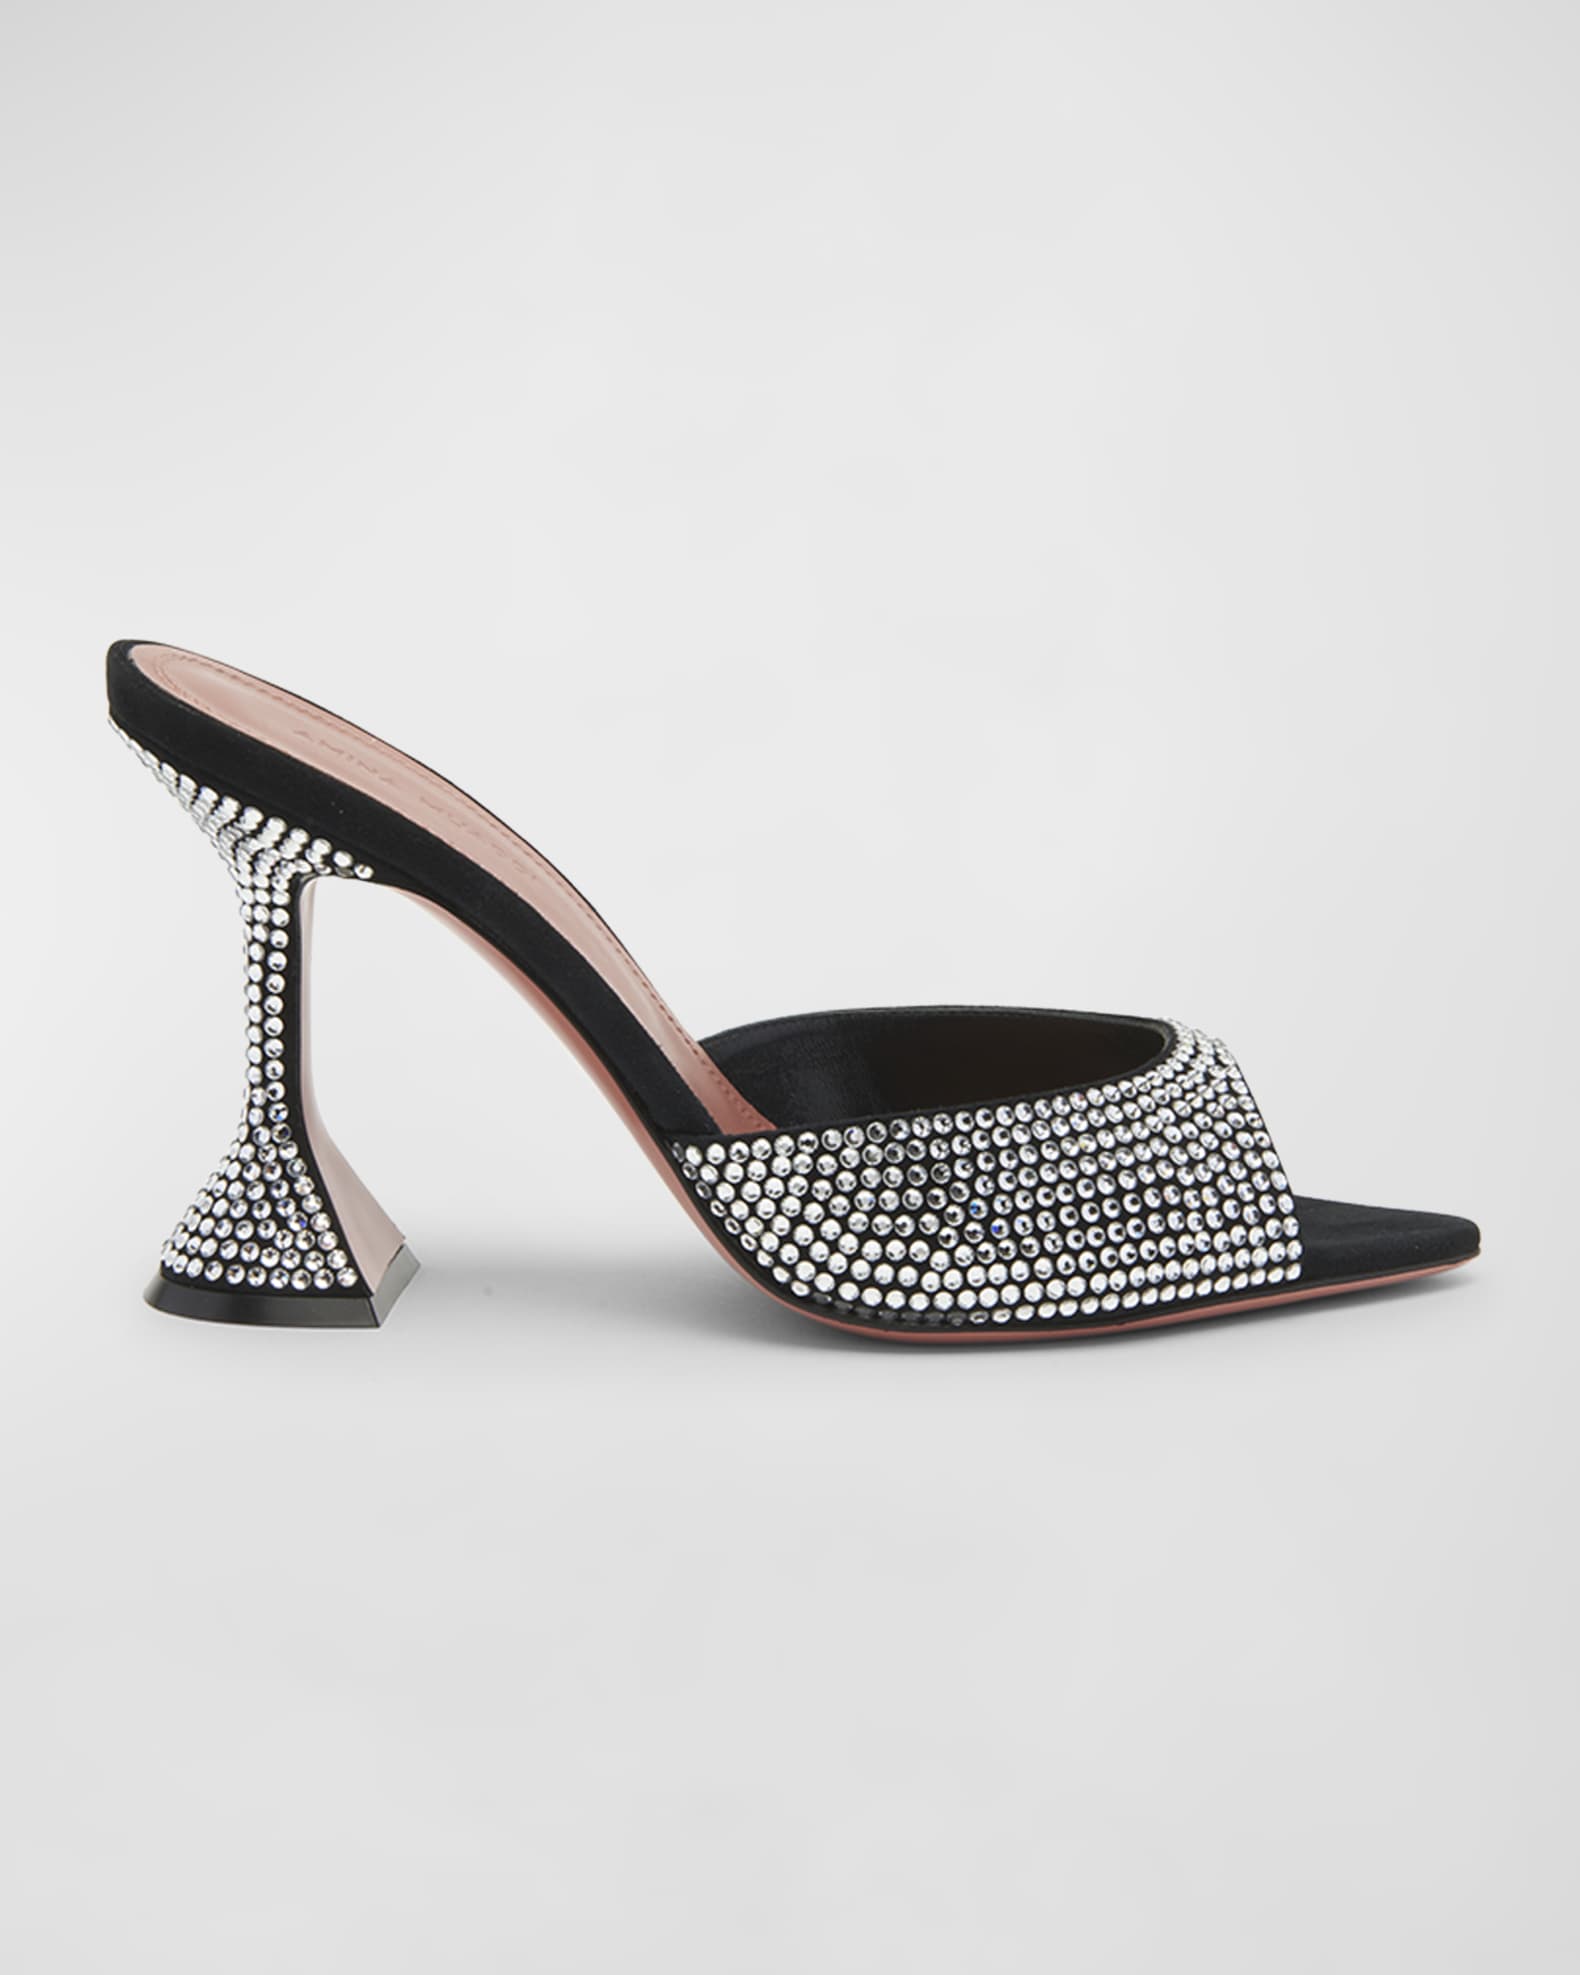 Amina Muaddi Caroline Crystal Cocktail Mule Sandals | Neiman Marcus